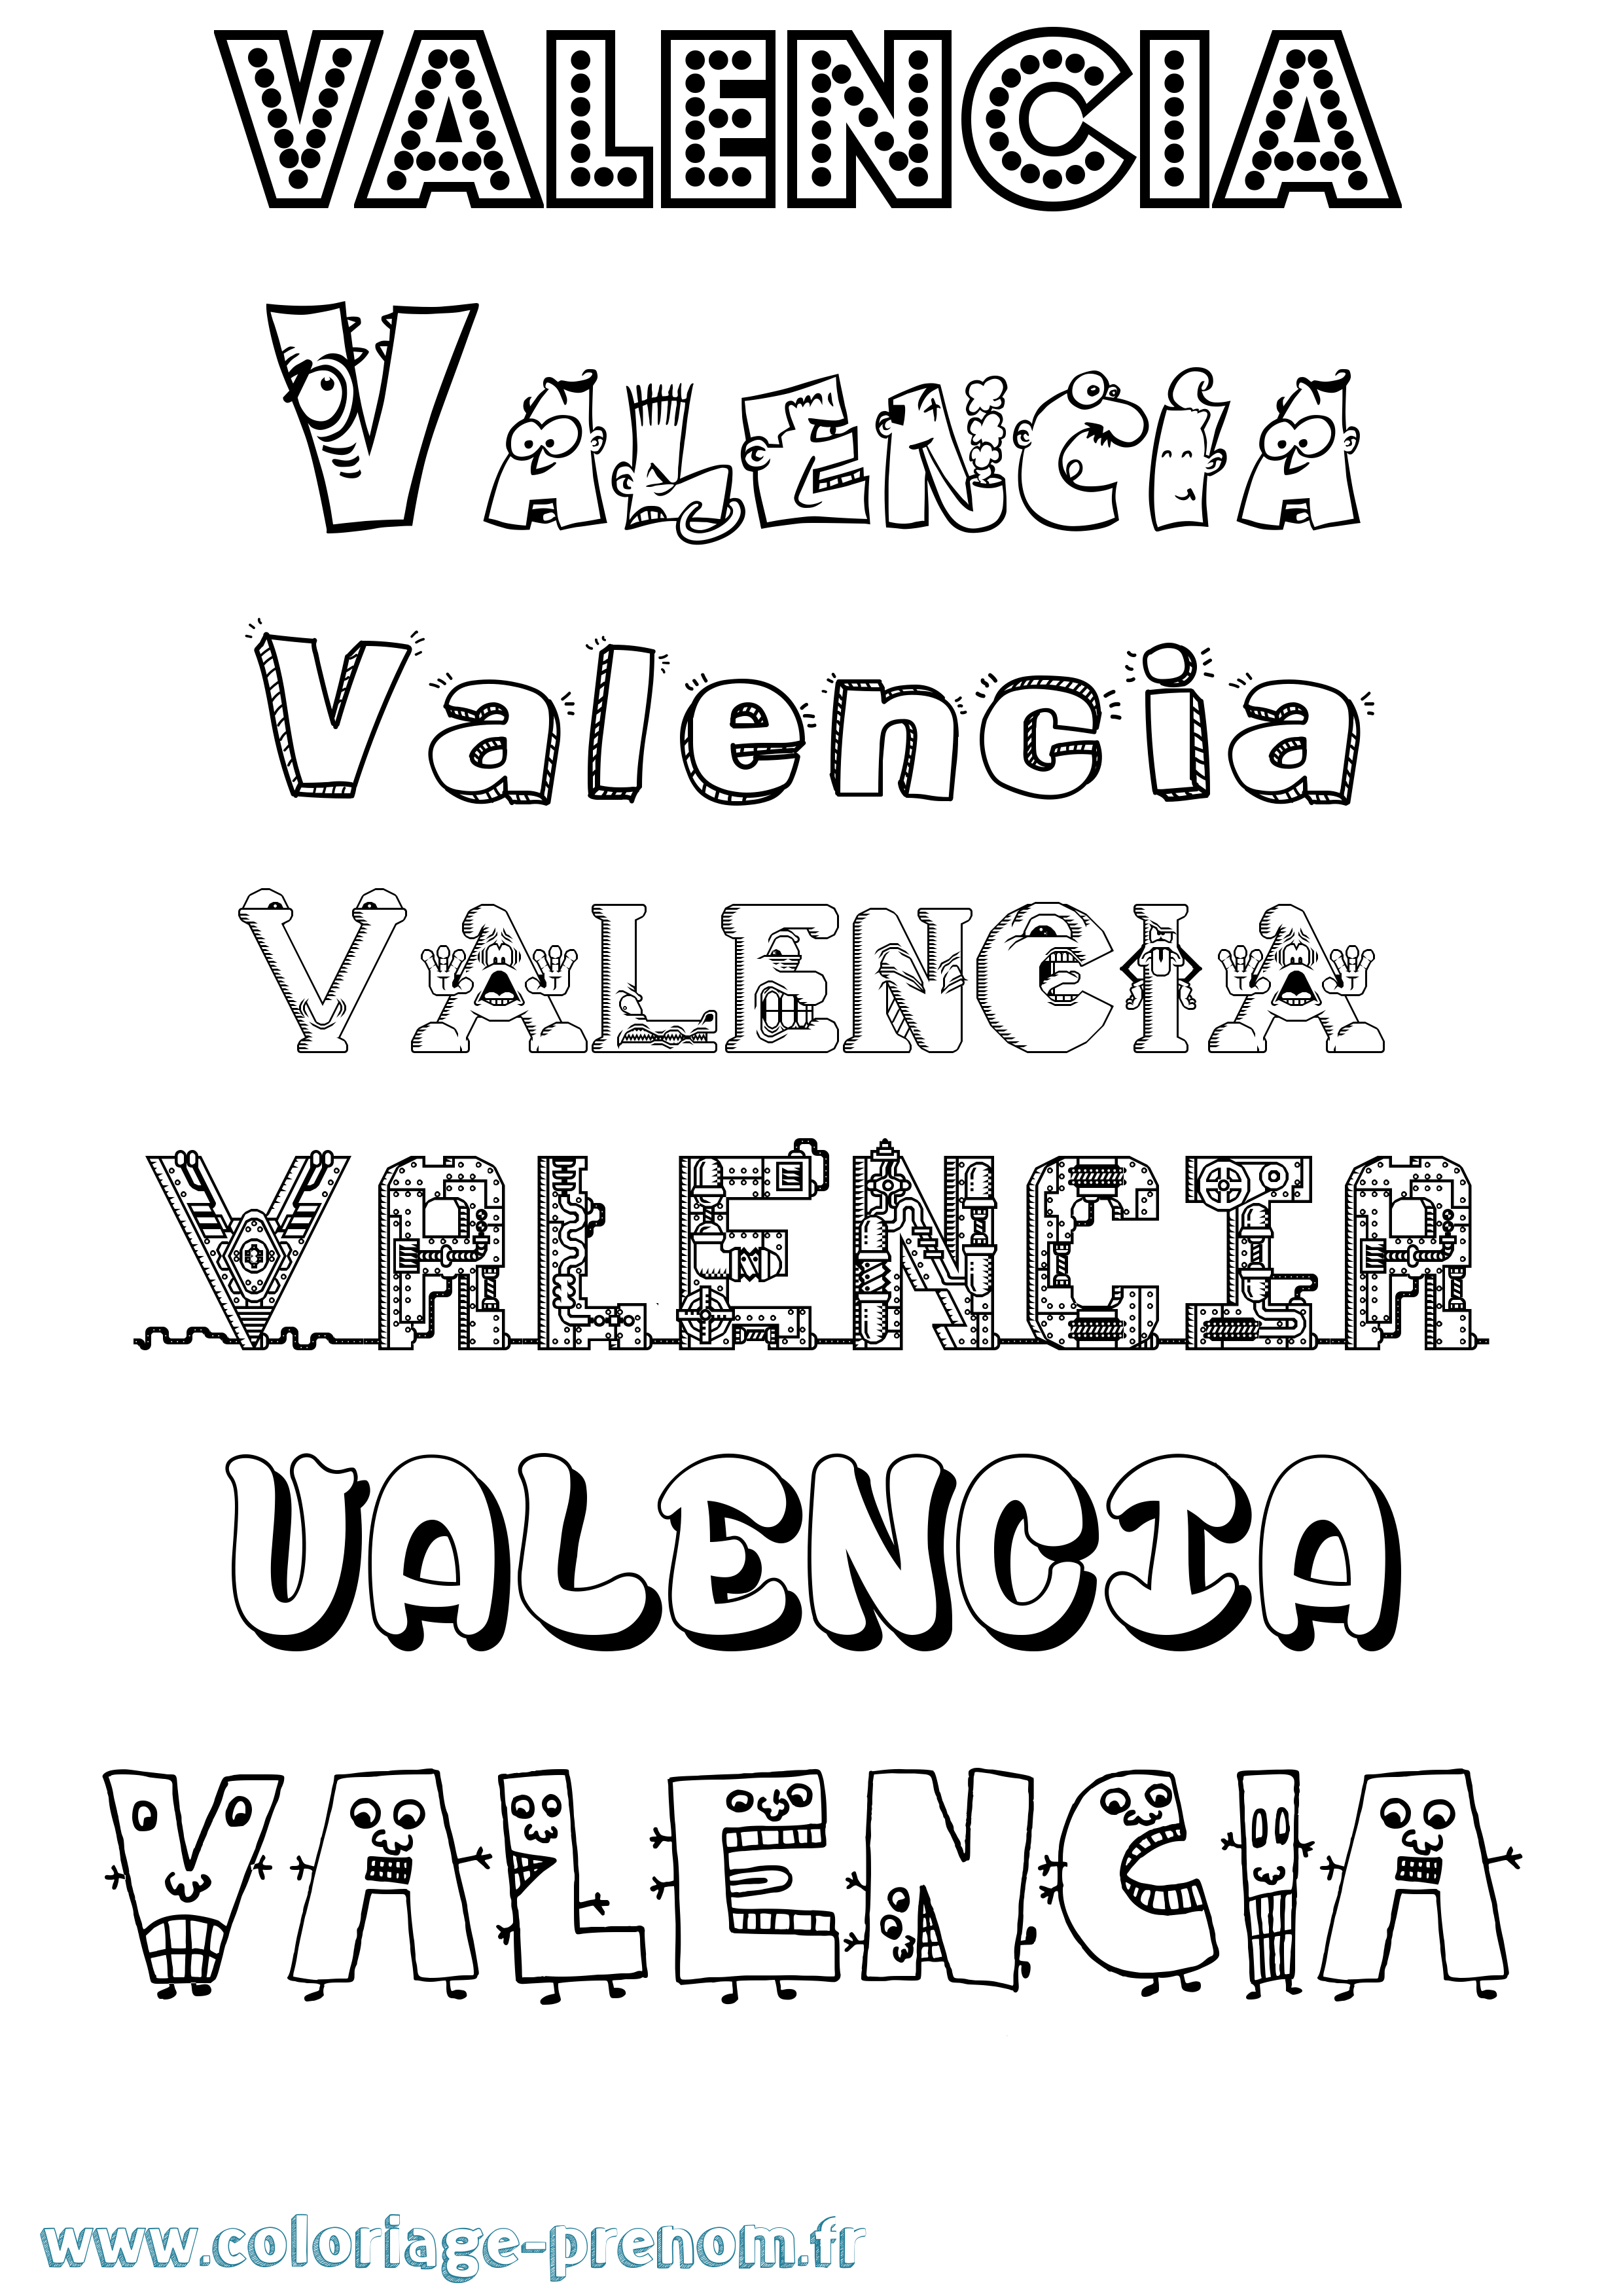 Coloriage prénom Valencia Fun